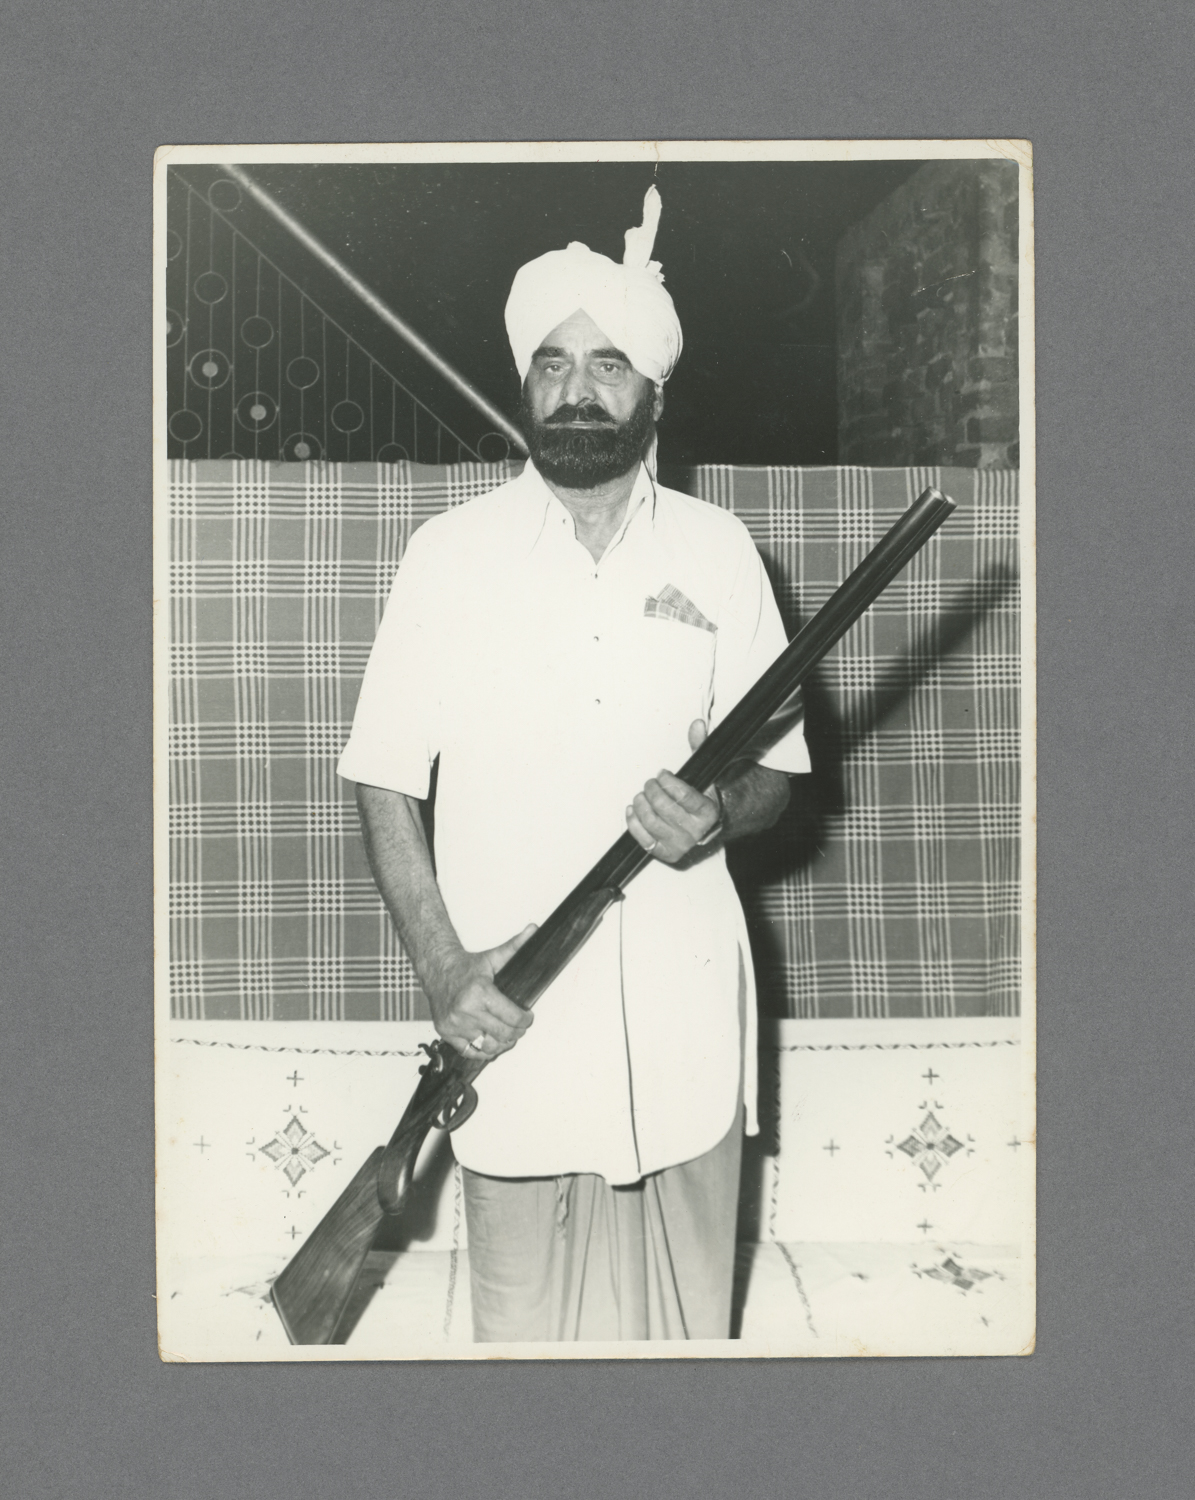 Punjab, India c.1976